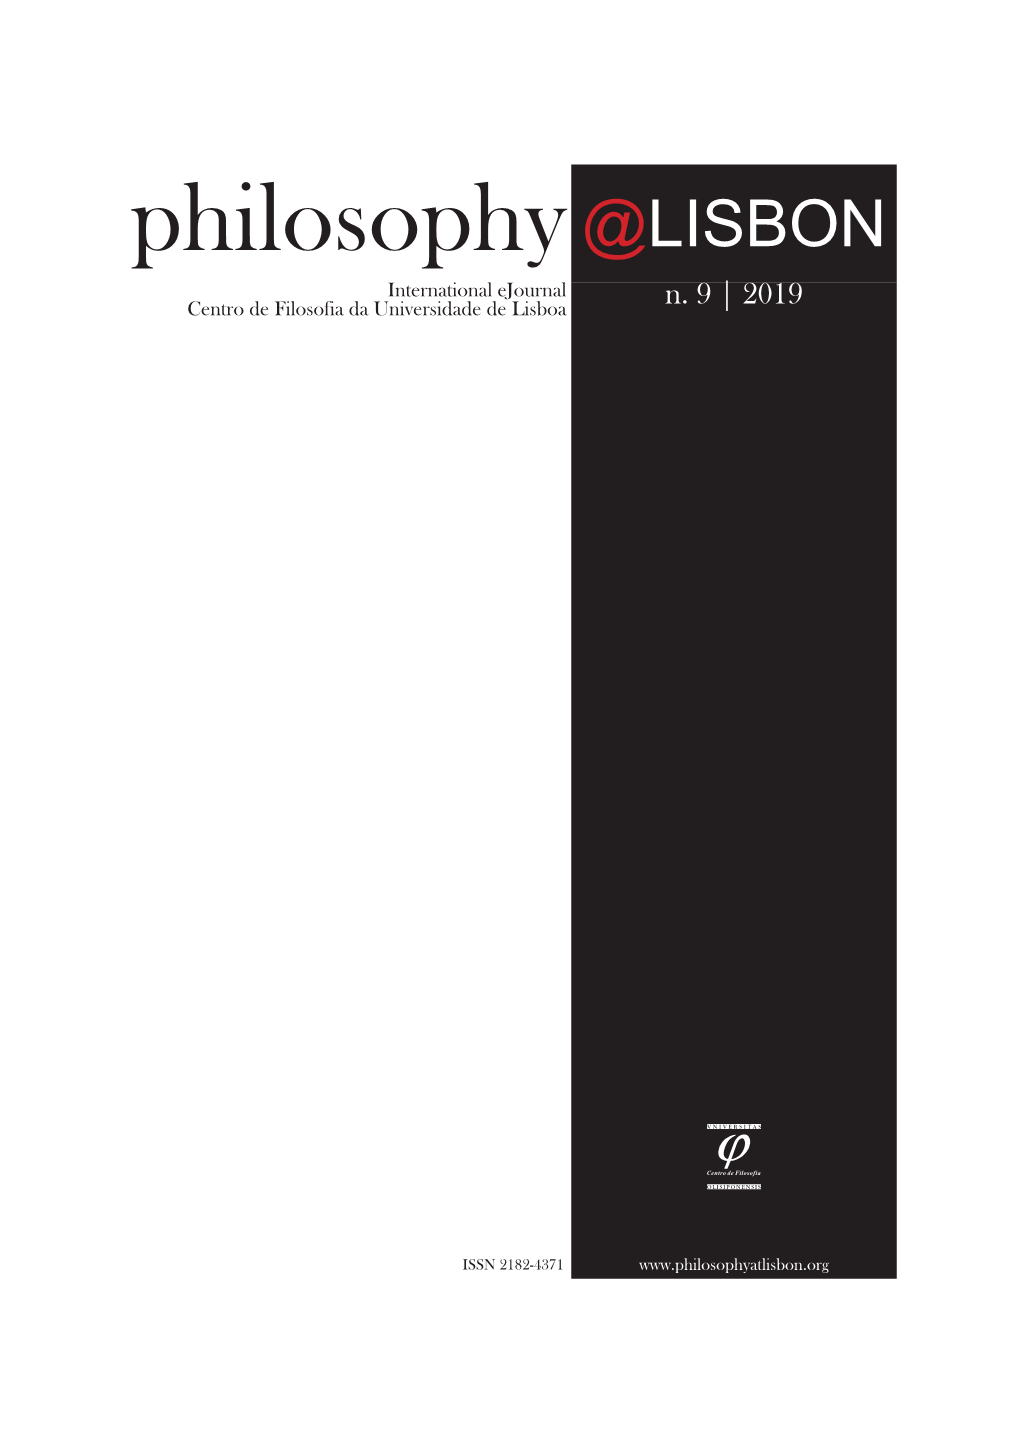 Philosophy@LISBON Presents a Wide Range of Themes